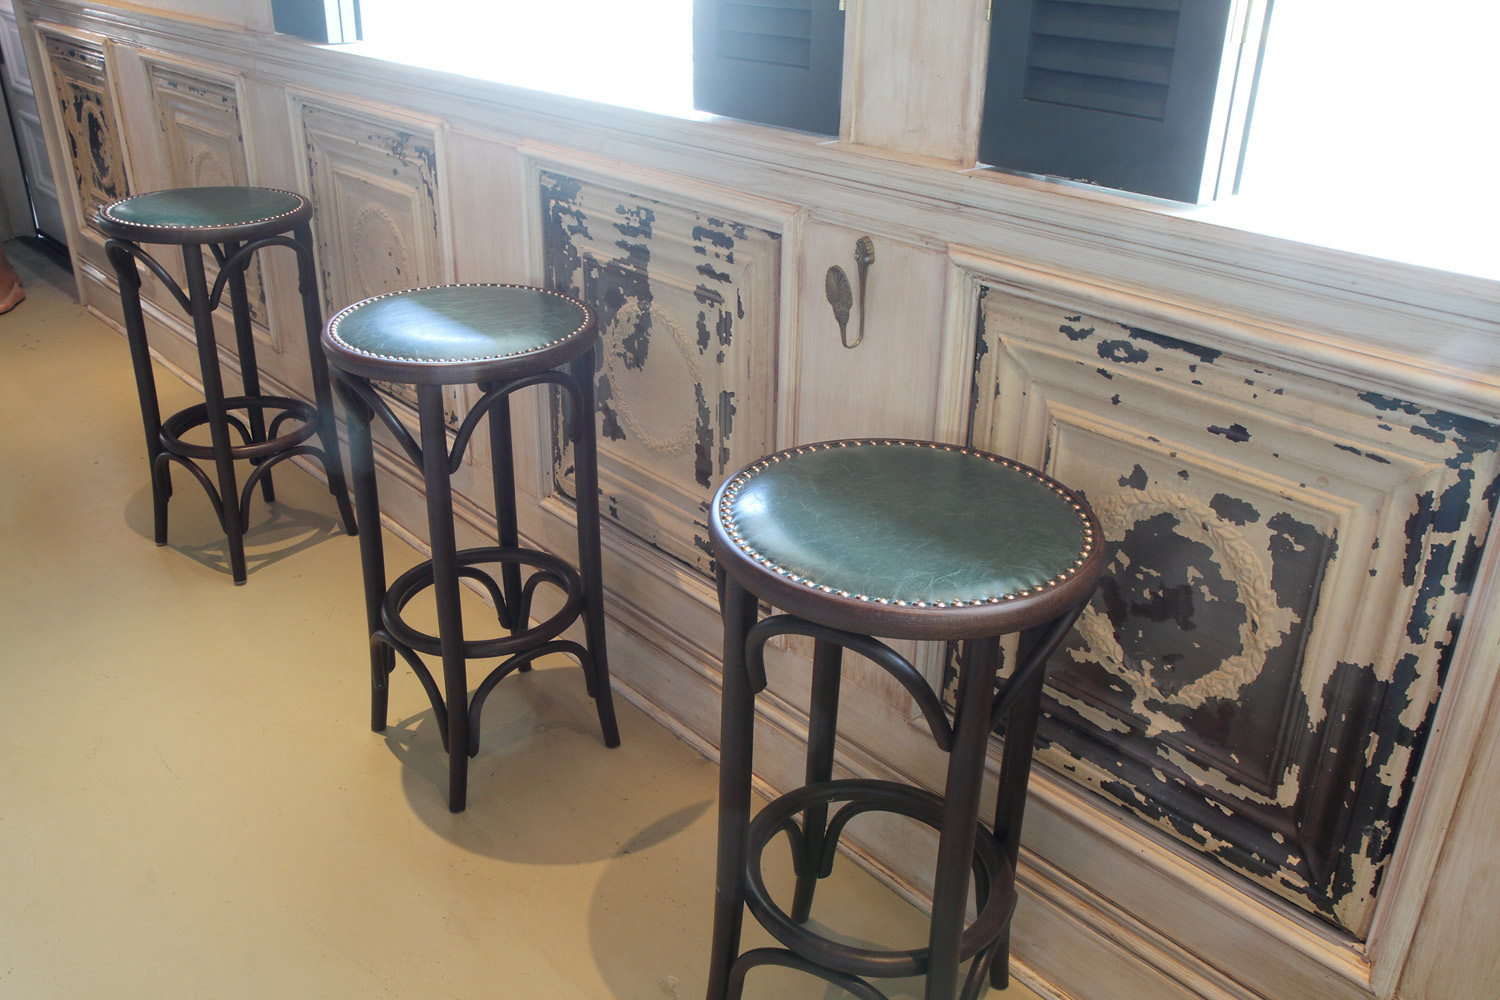 Hatchet Hall stools and wall design